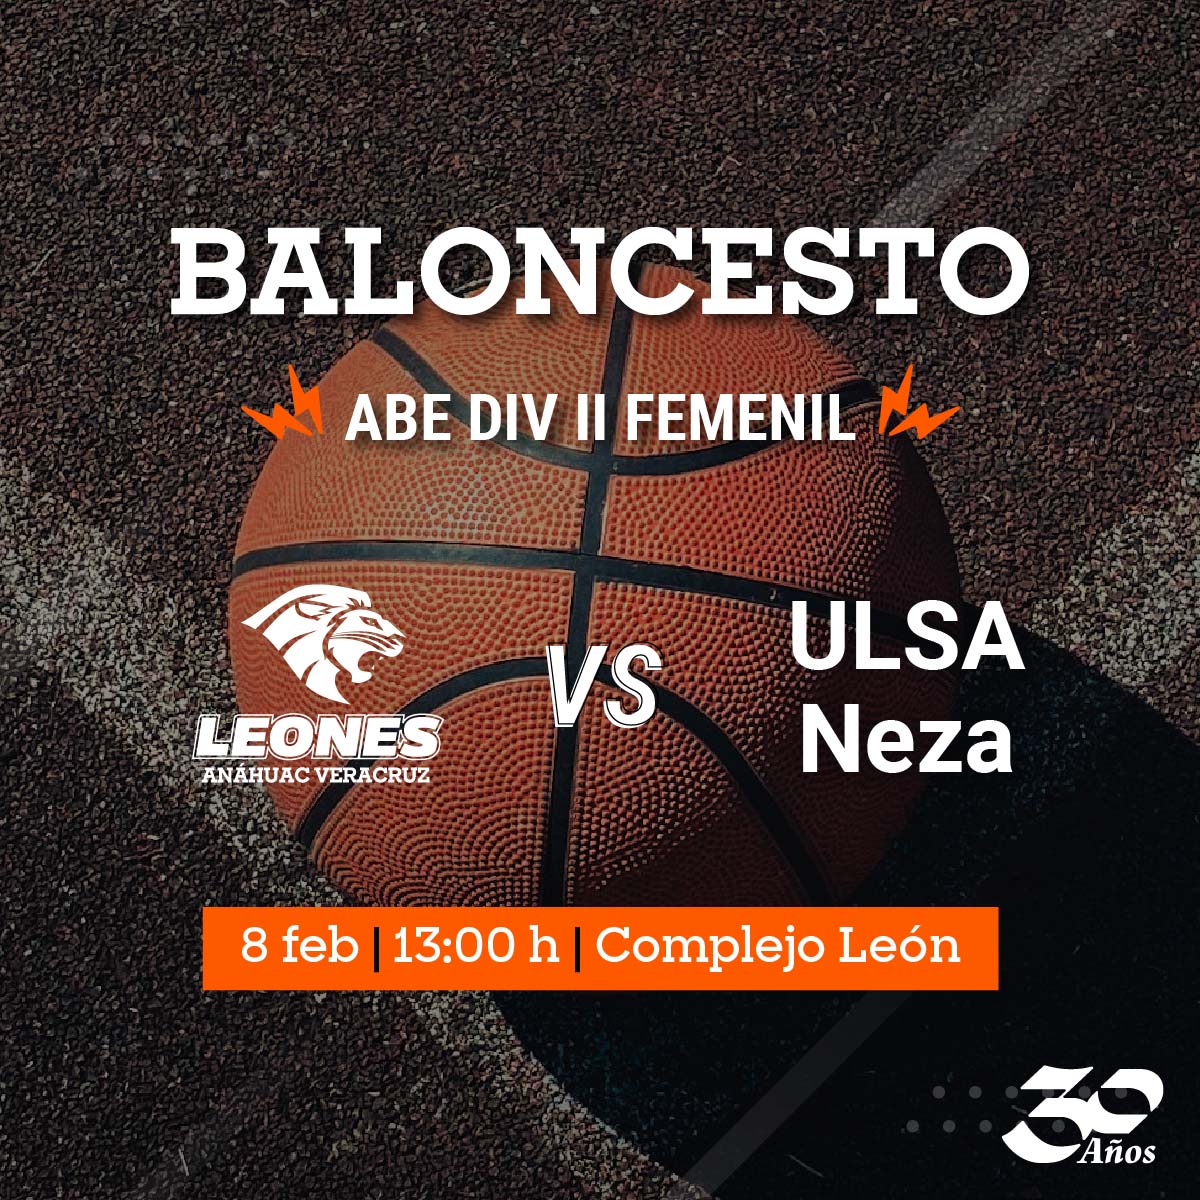 Baloncesto Femenil ABE: Leonas vs ULSA Neza